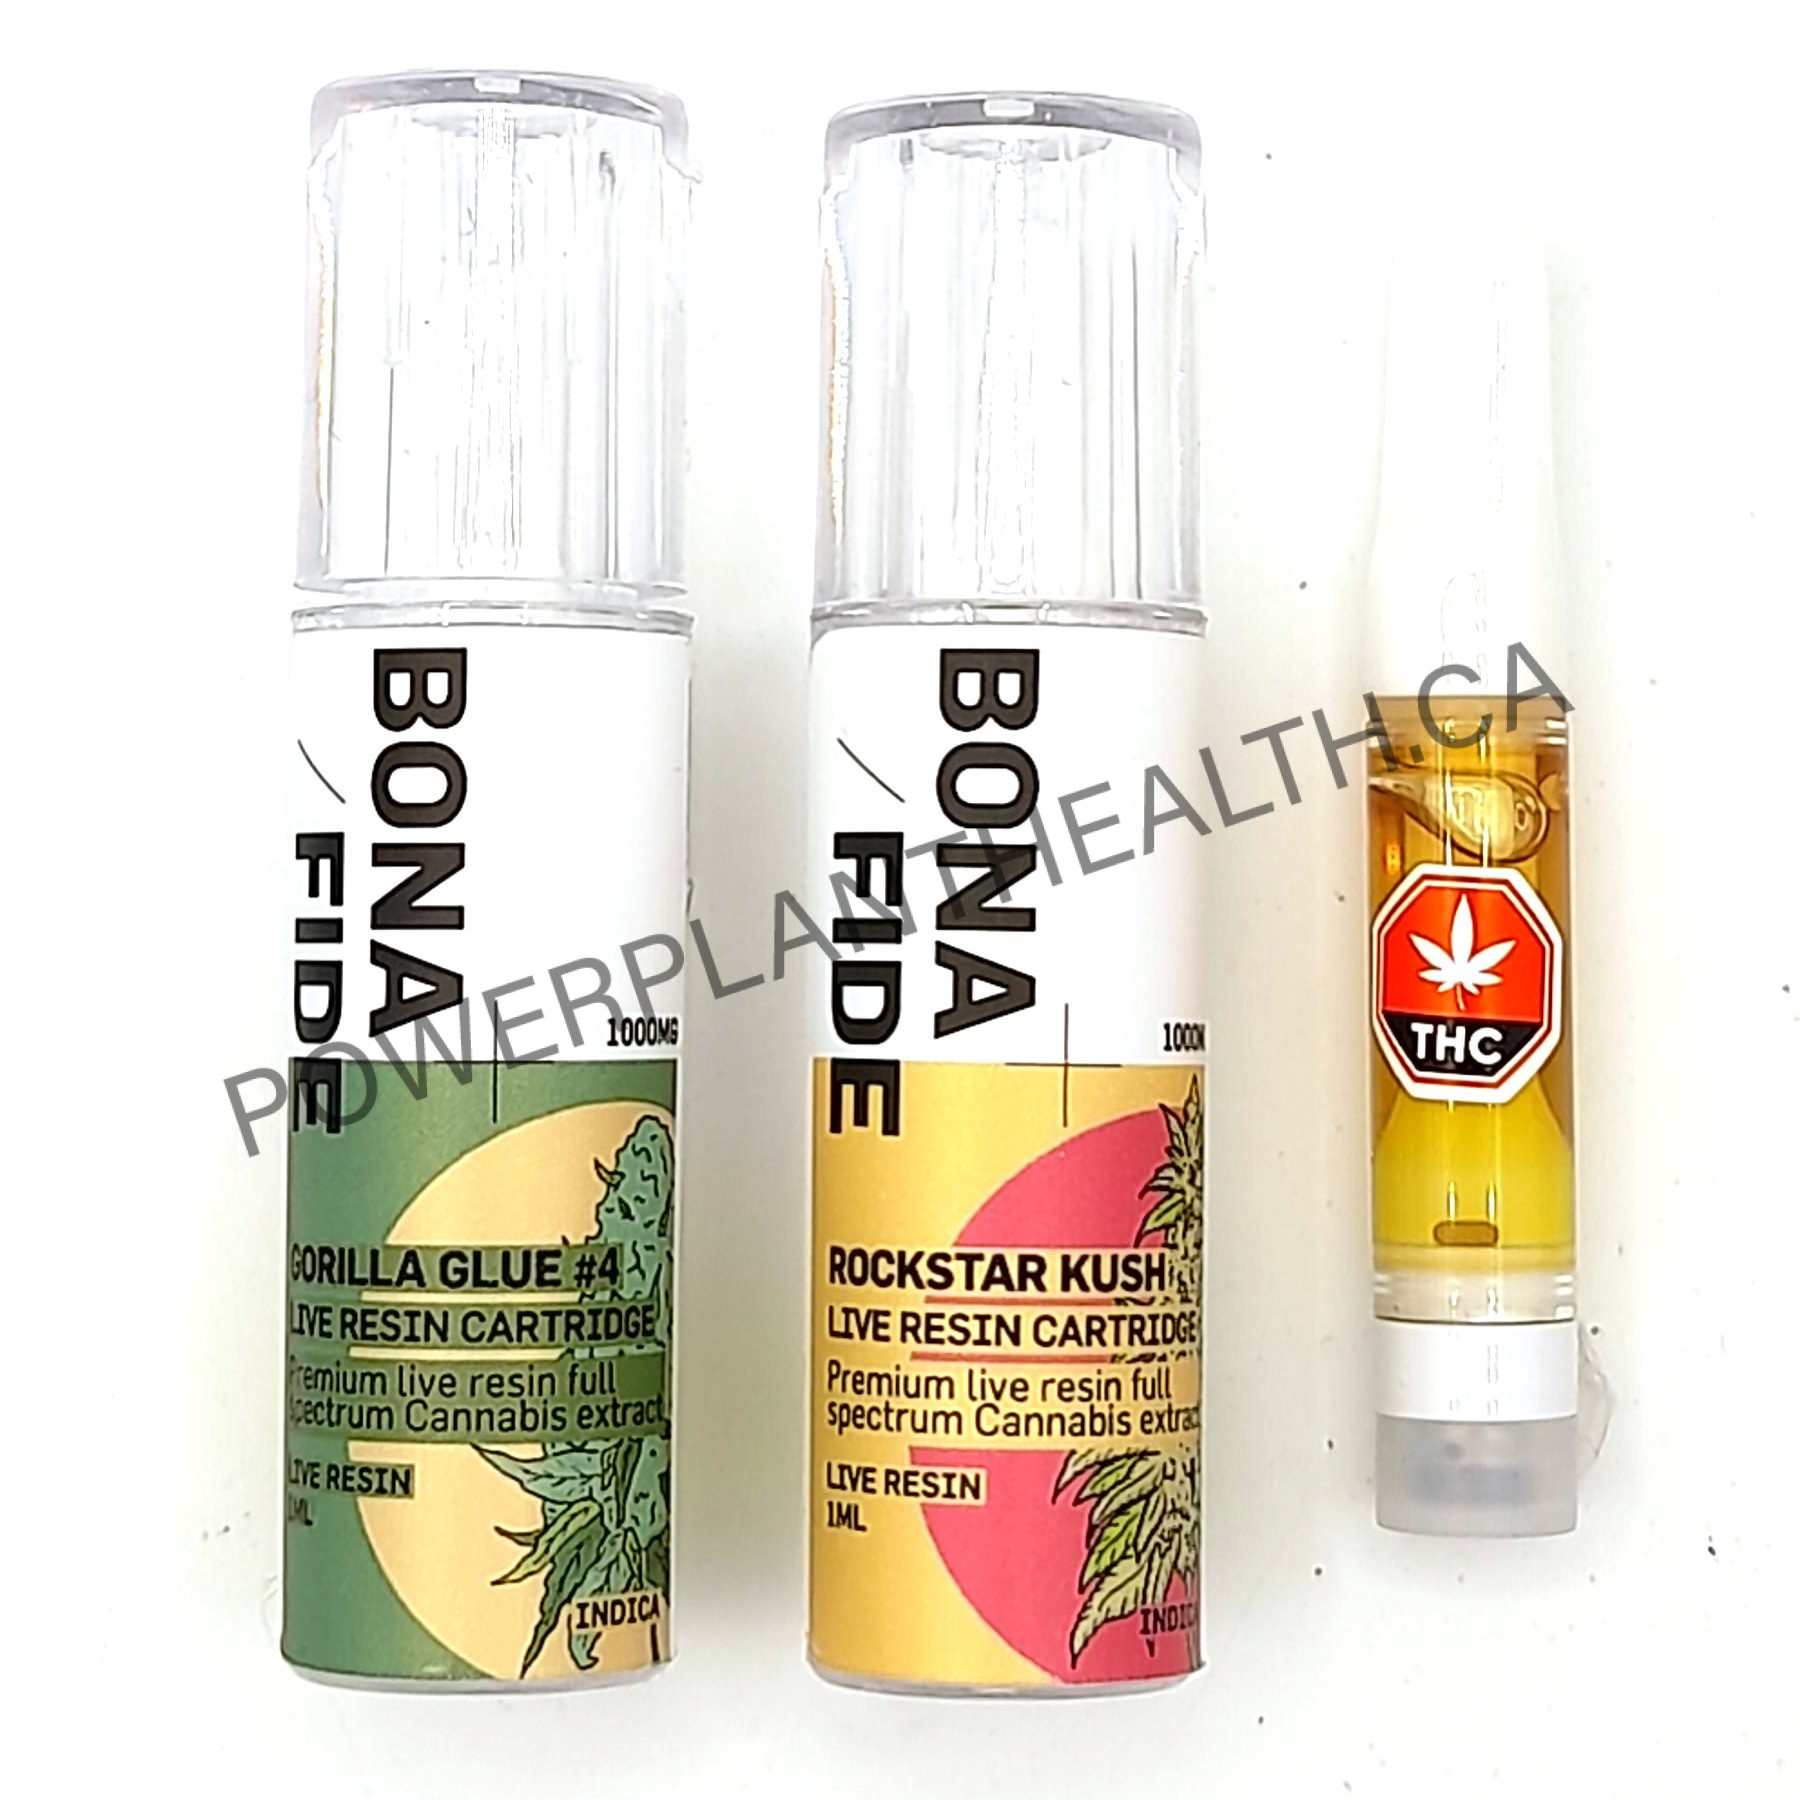 Bonafide: 1g Premium Sauce Cartridges - Power Plant Health